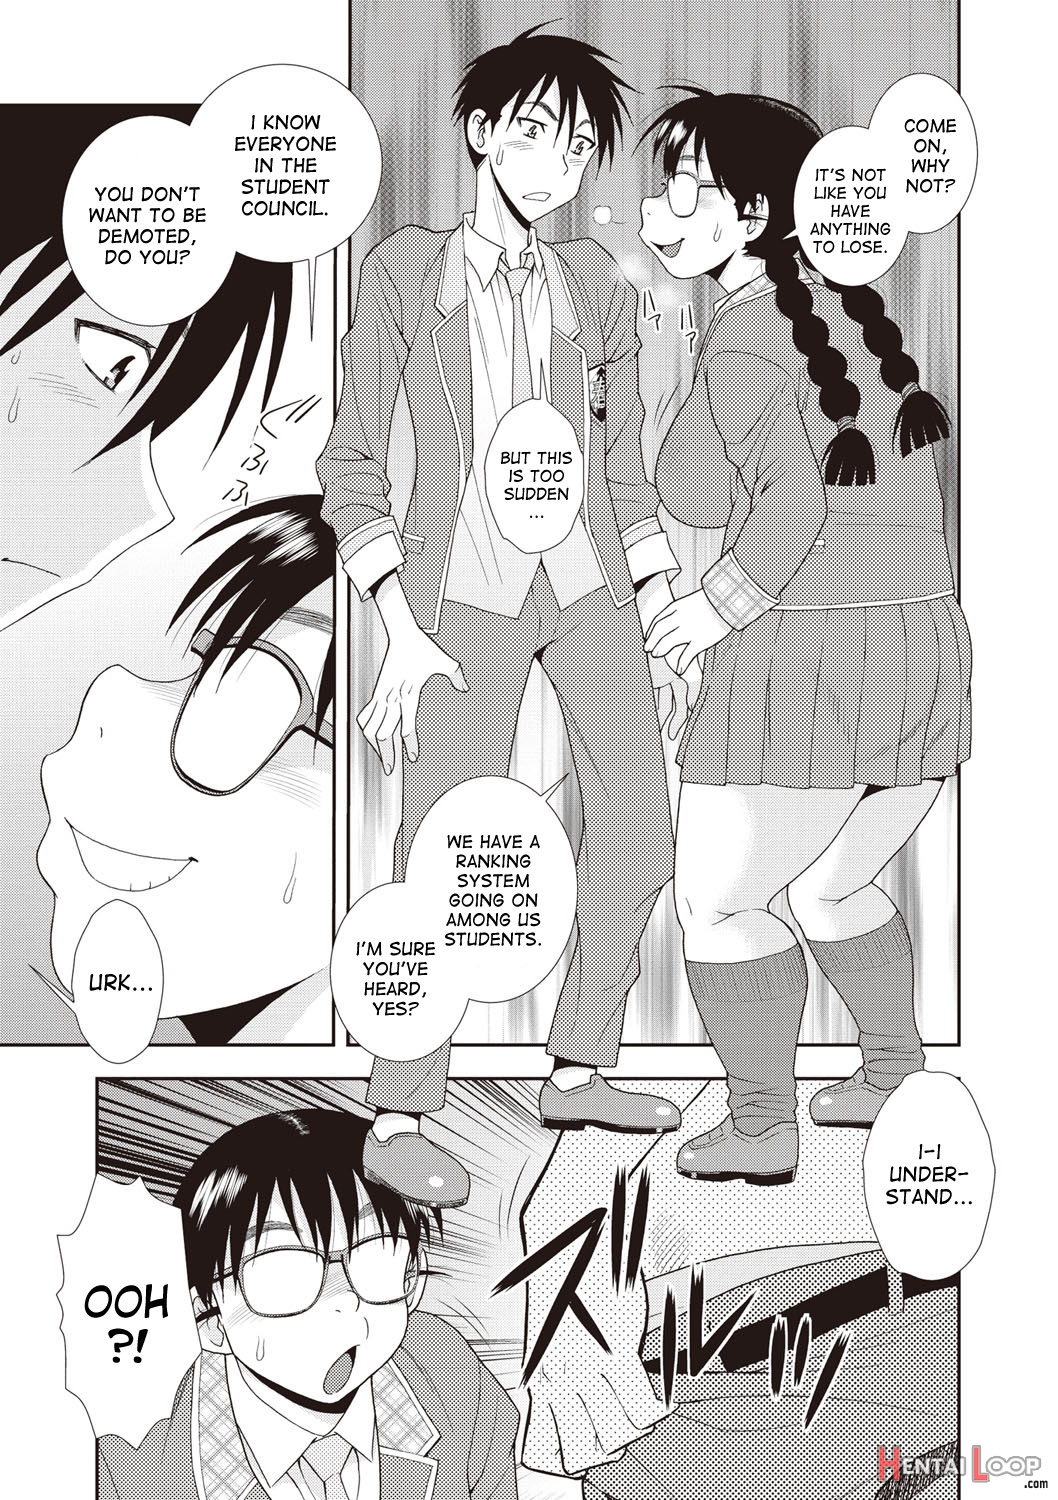 The Beautiful Tatsumi-san page 5